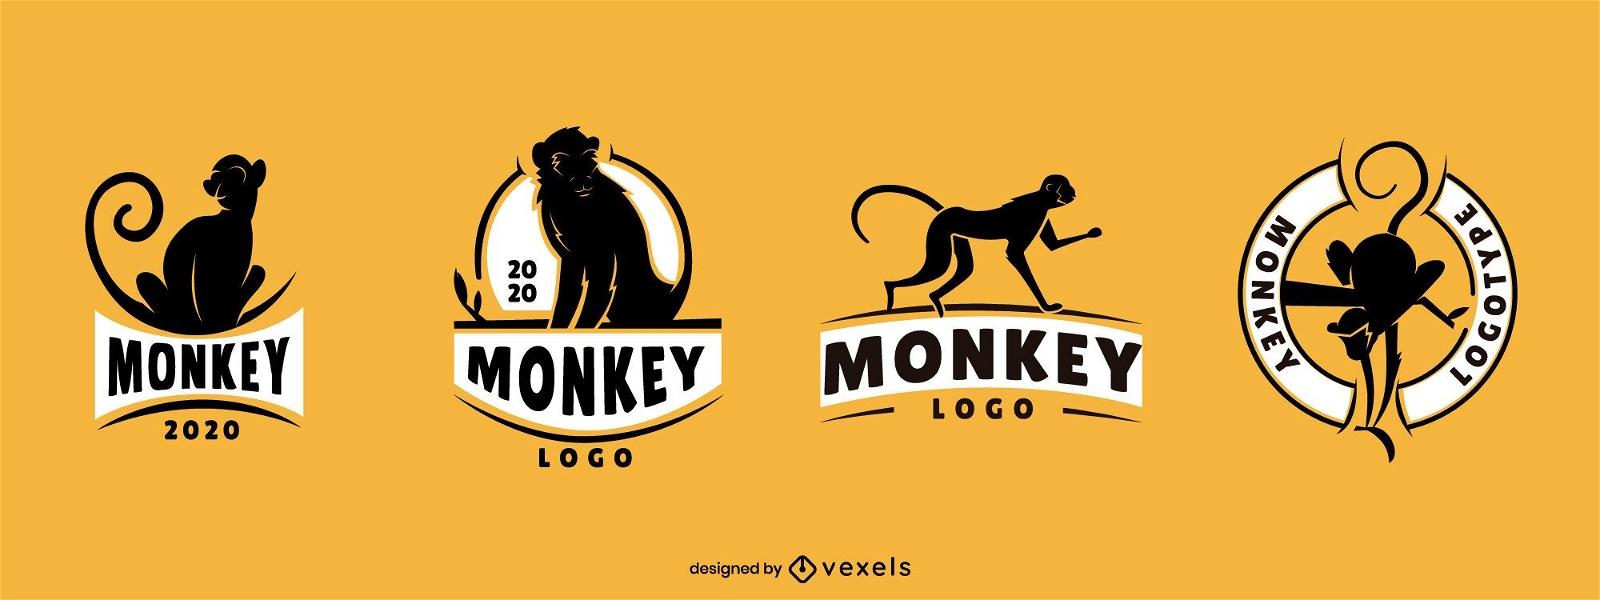 Monkey logo design set